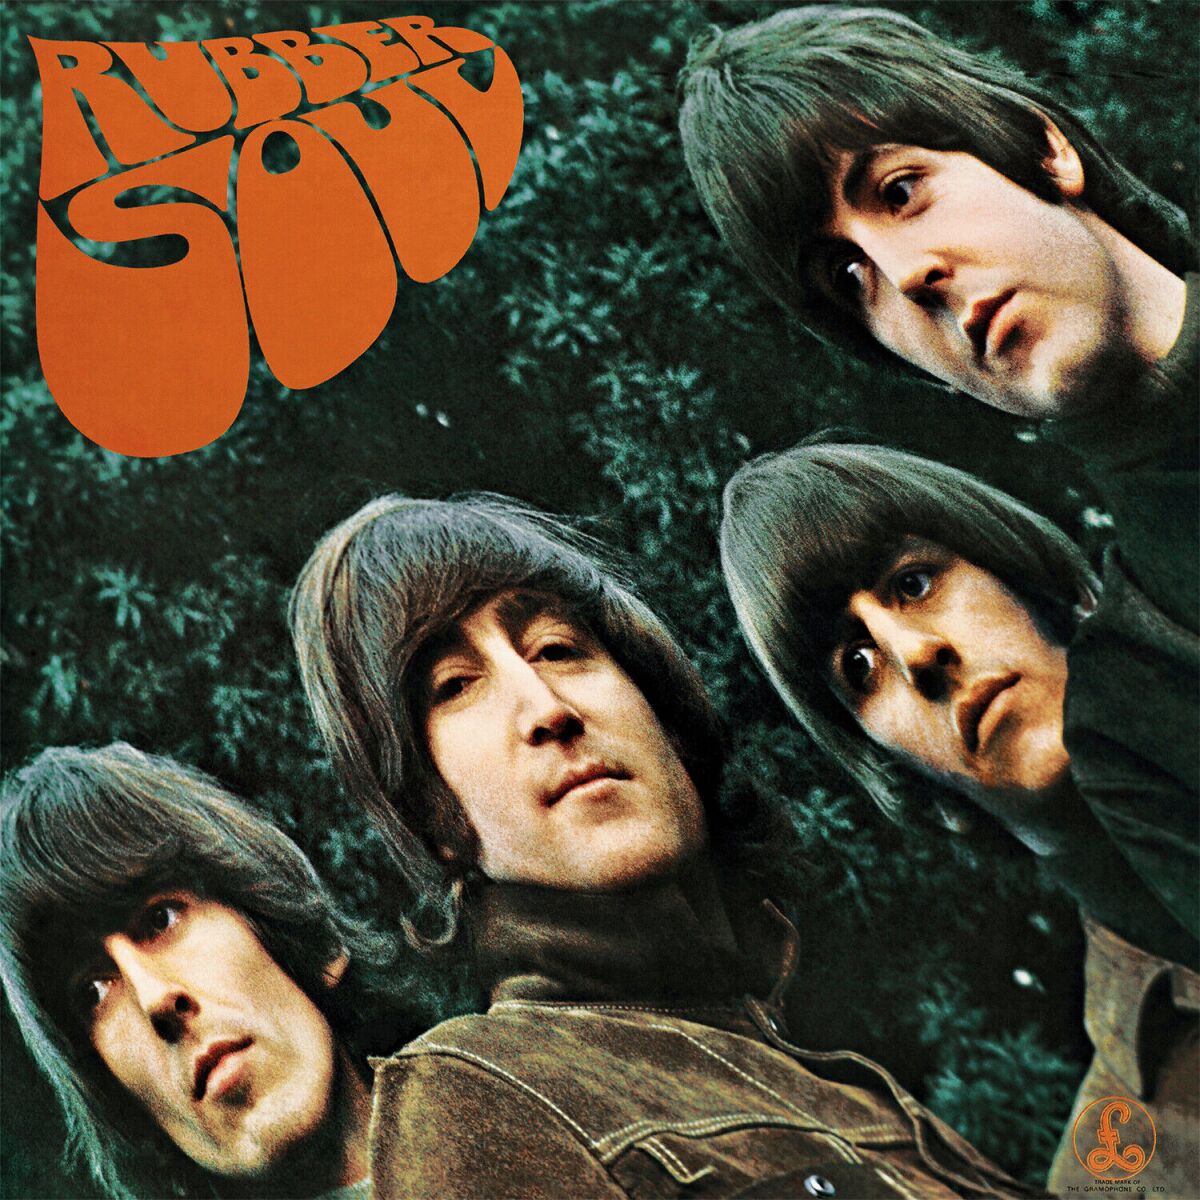 The album cover for the Beatles' "Rubber Soul" album.